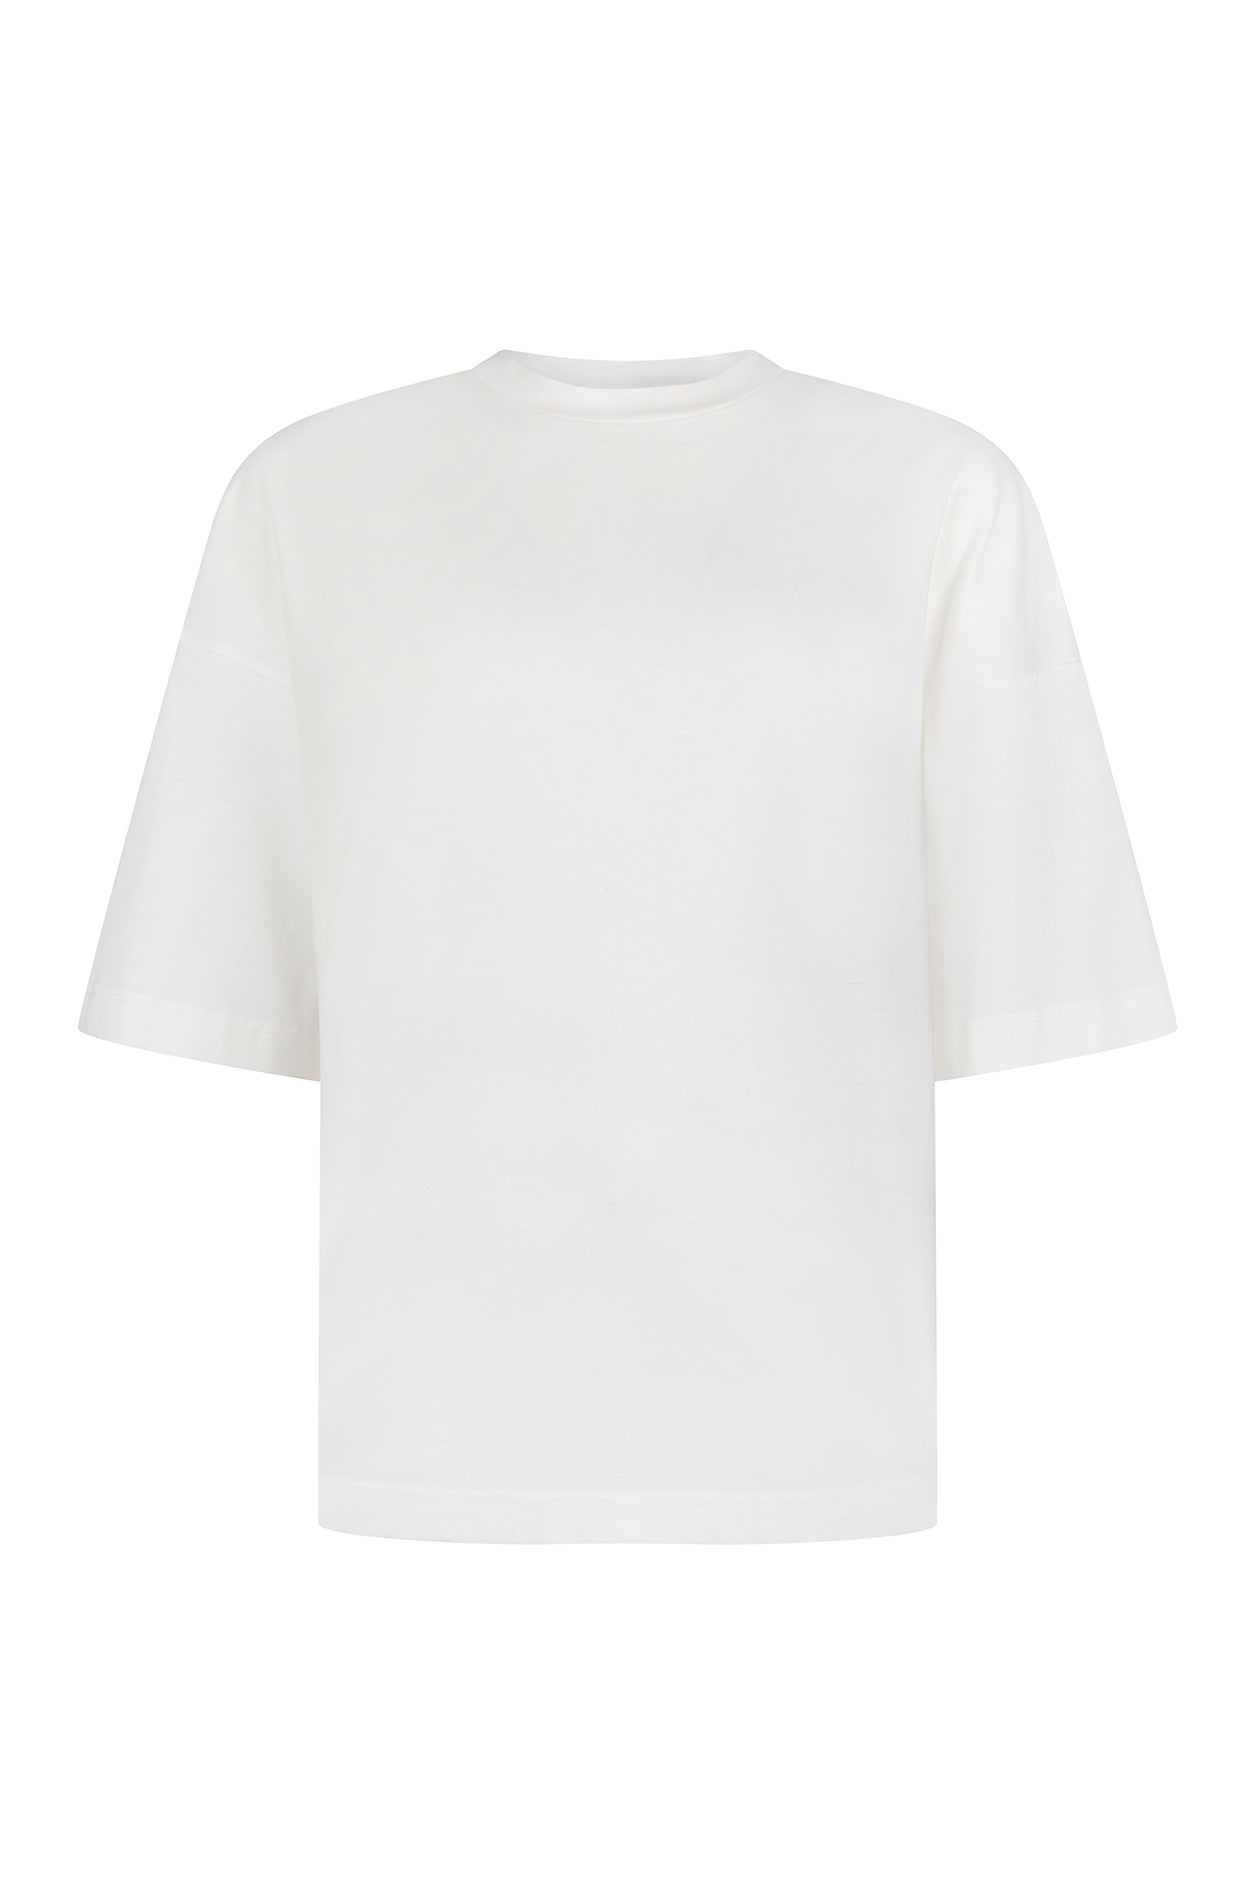 Gibson T-Shirt White